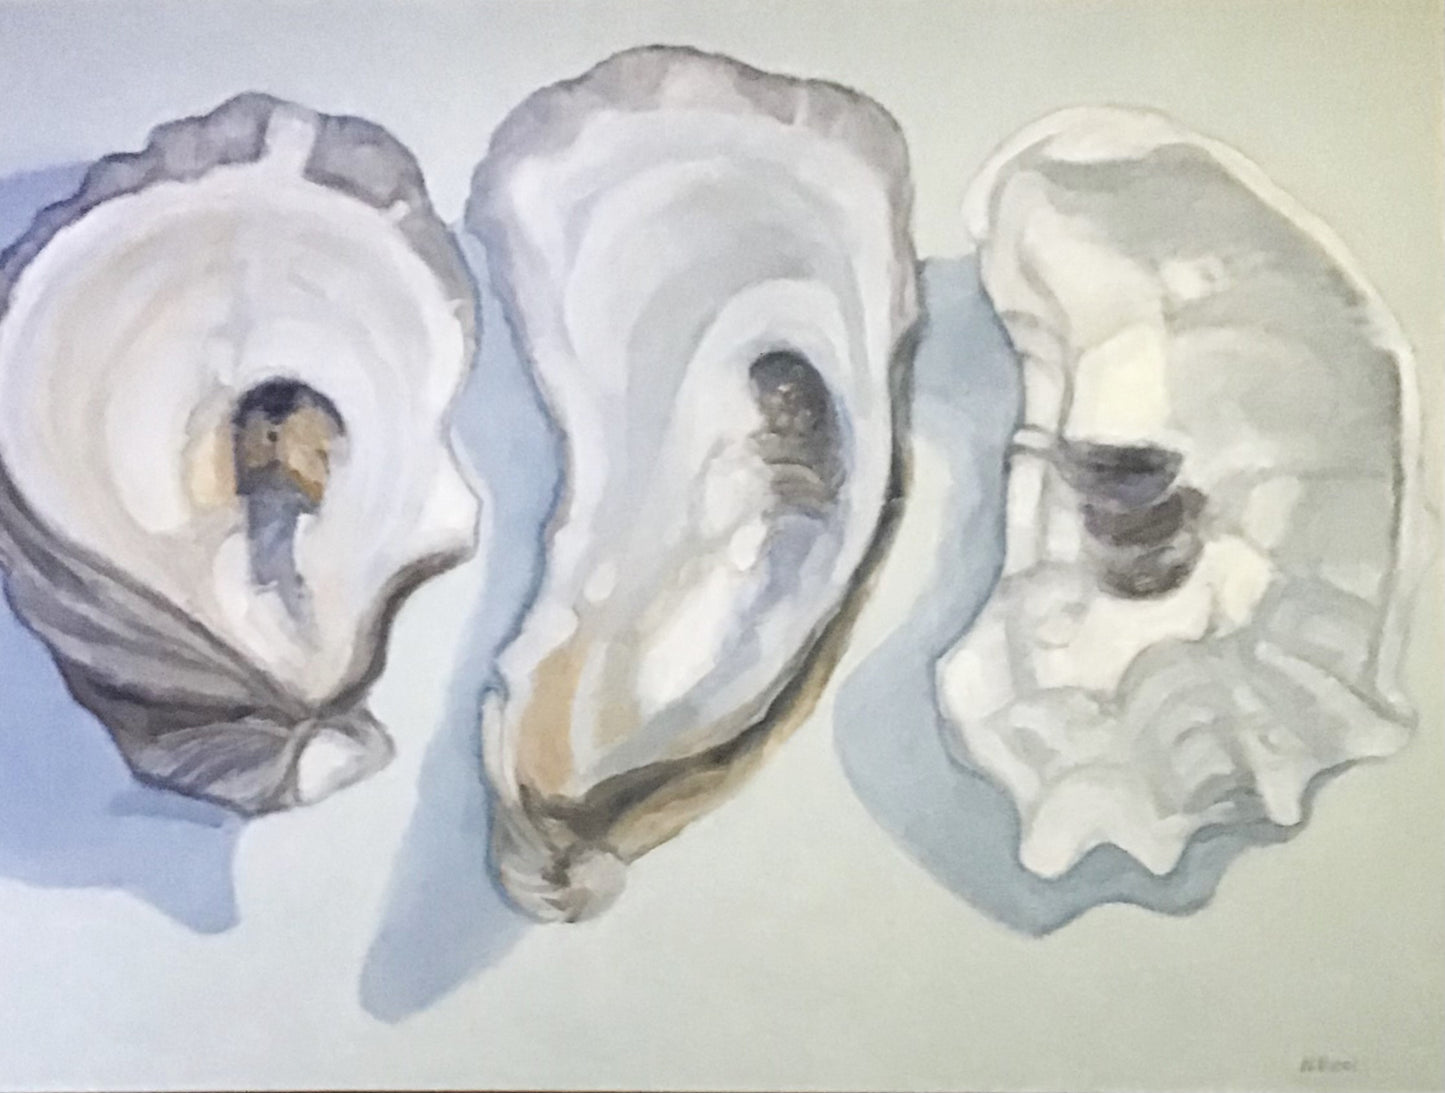 Just Oysters - Three Wellfleet Oyster Shells